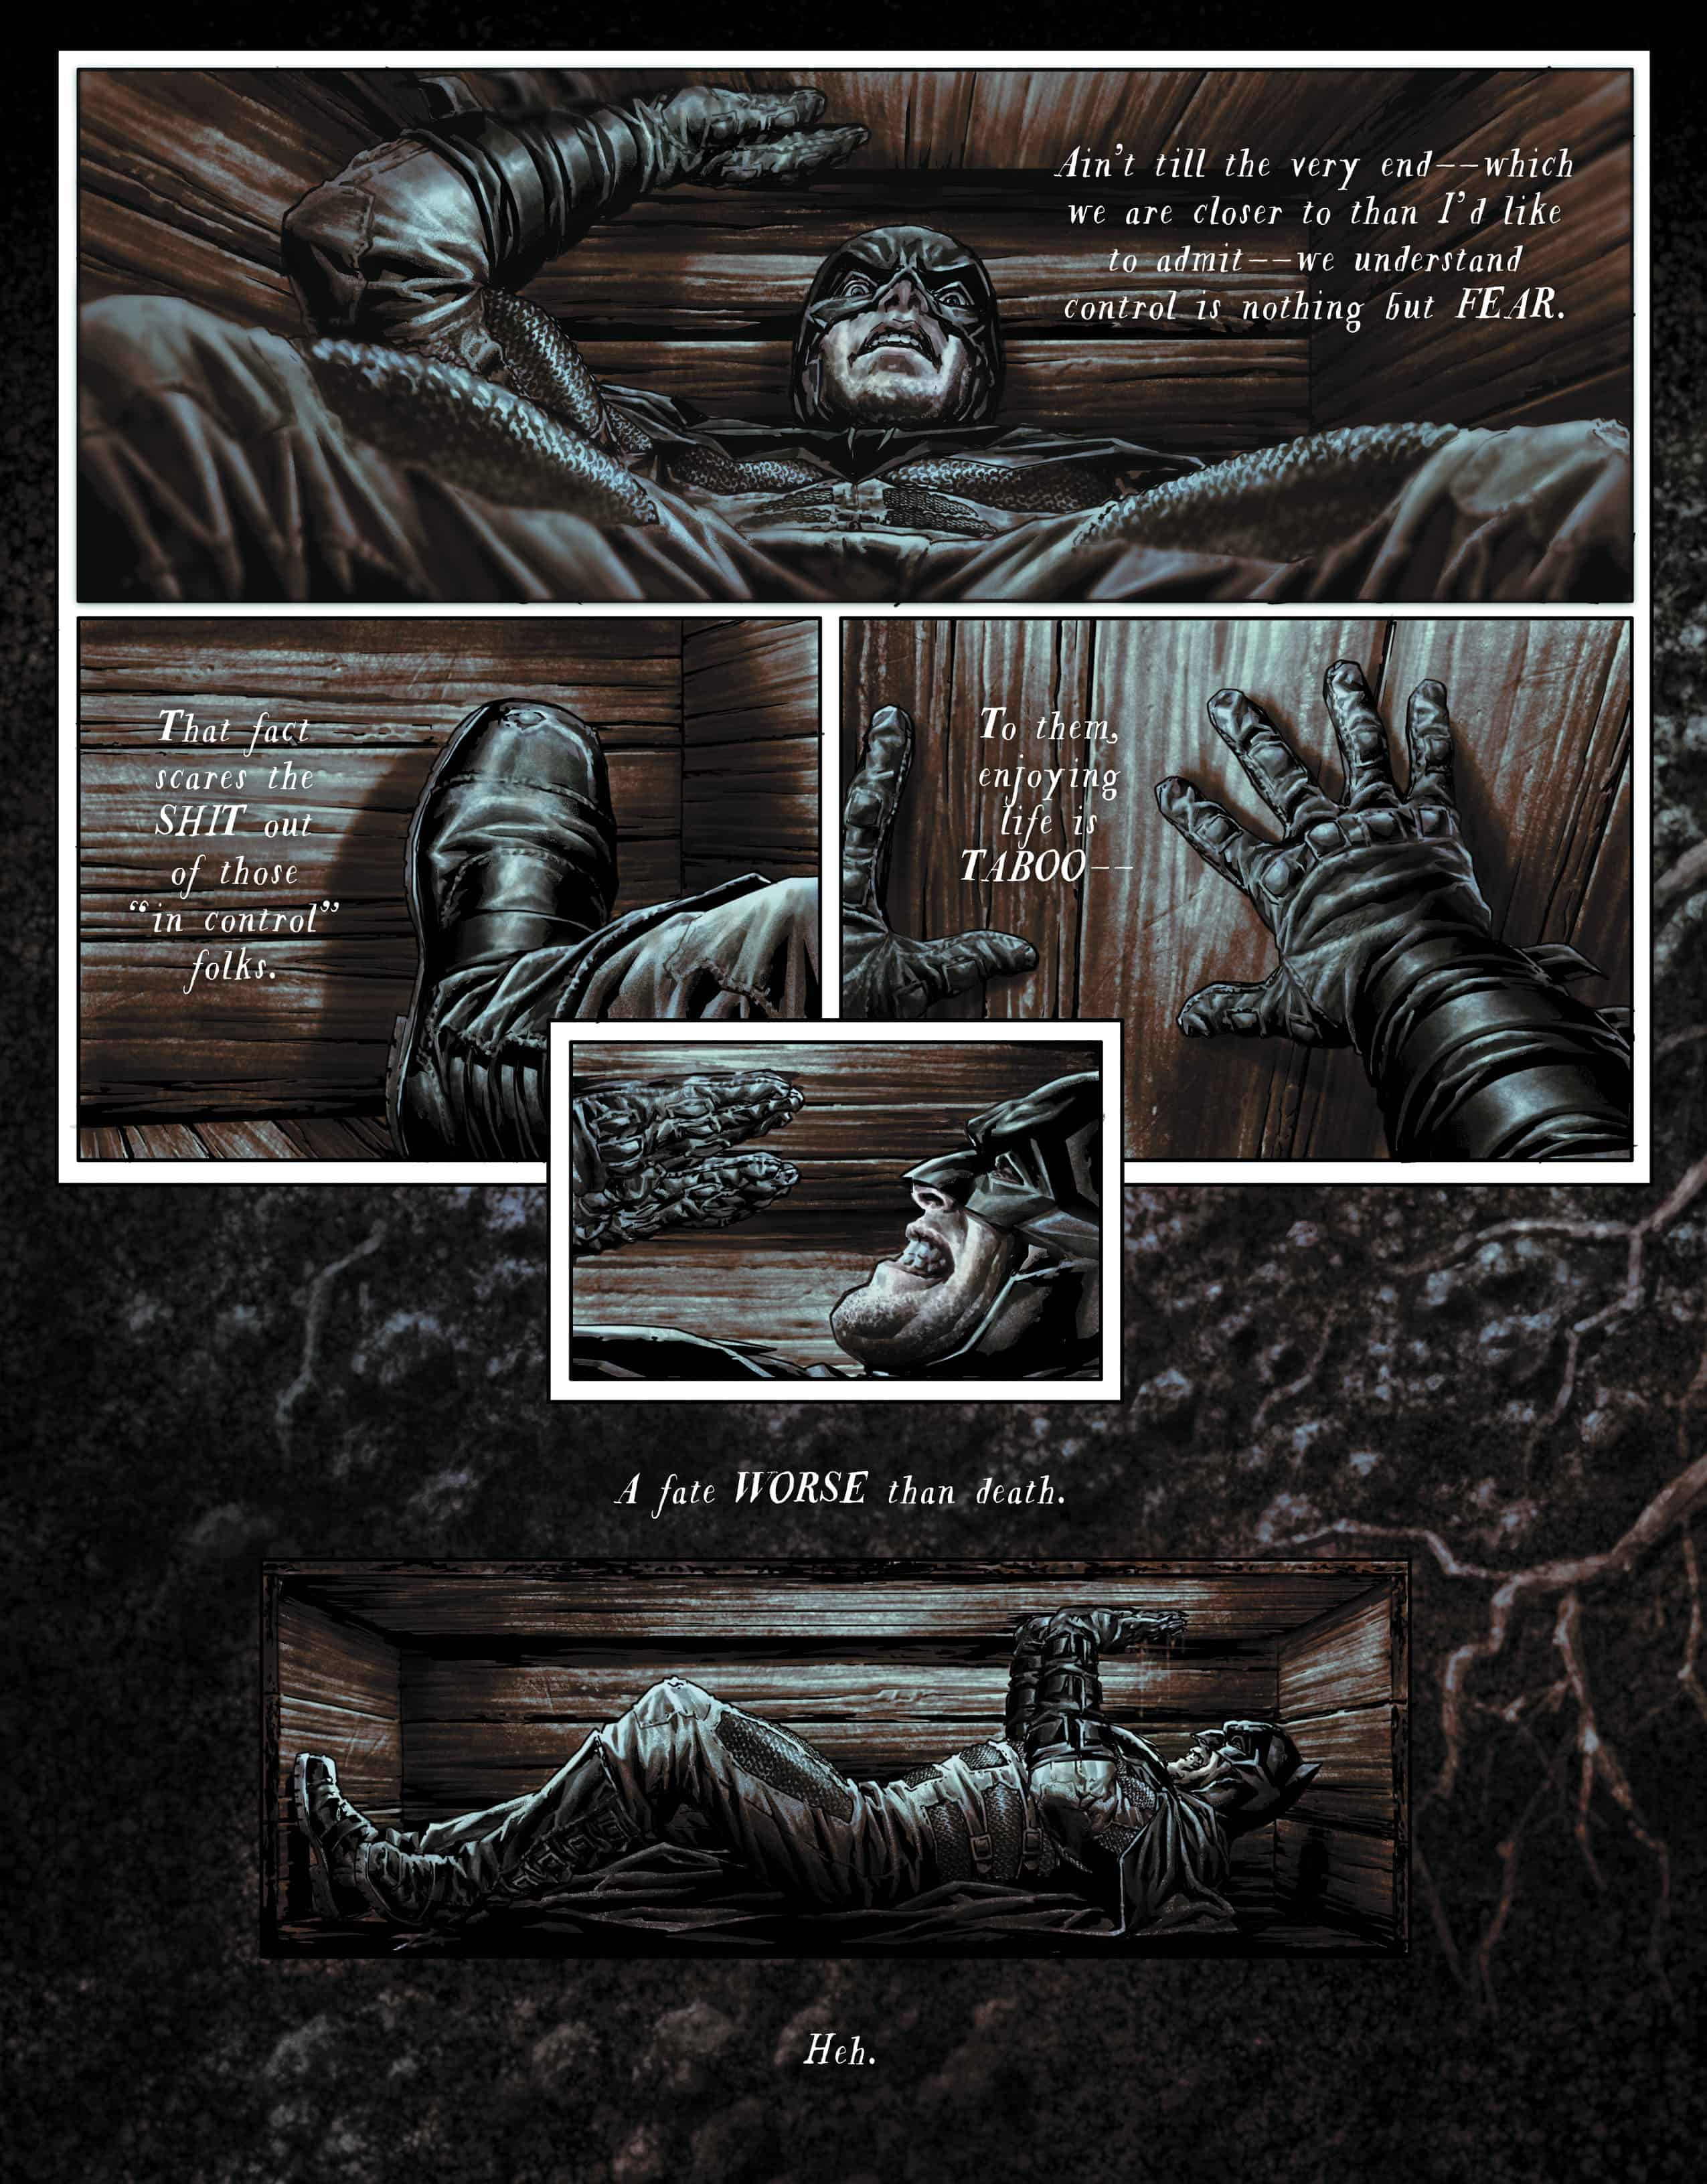 Batman Damned #3: Ghost Stories - Comic Watch